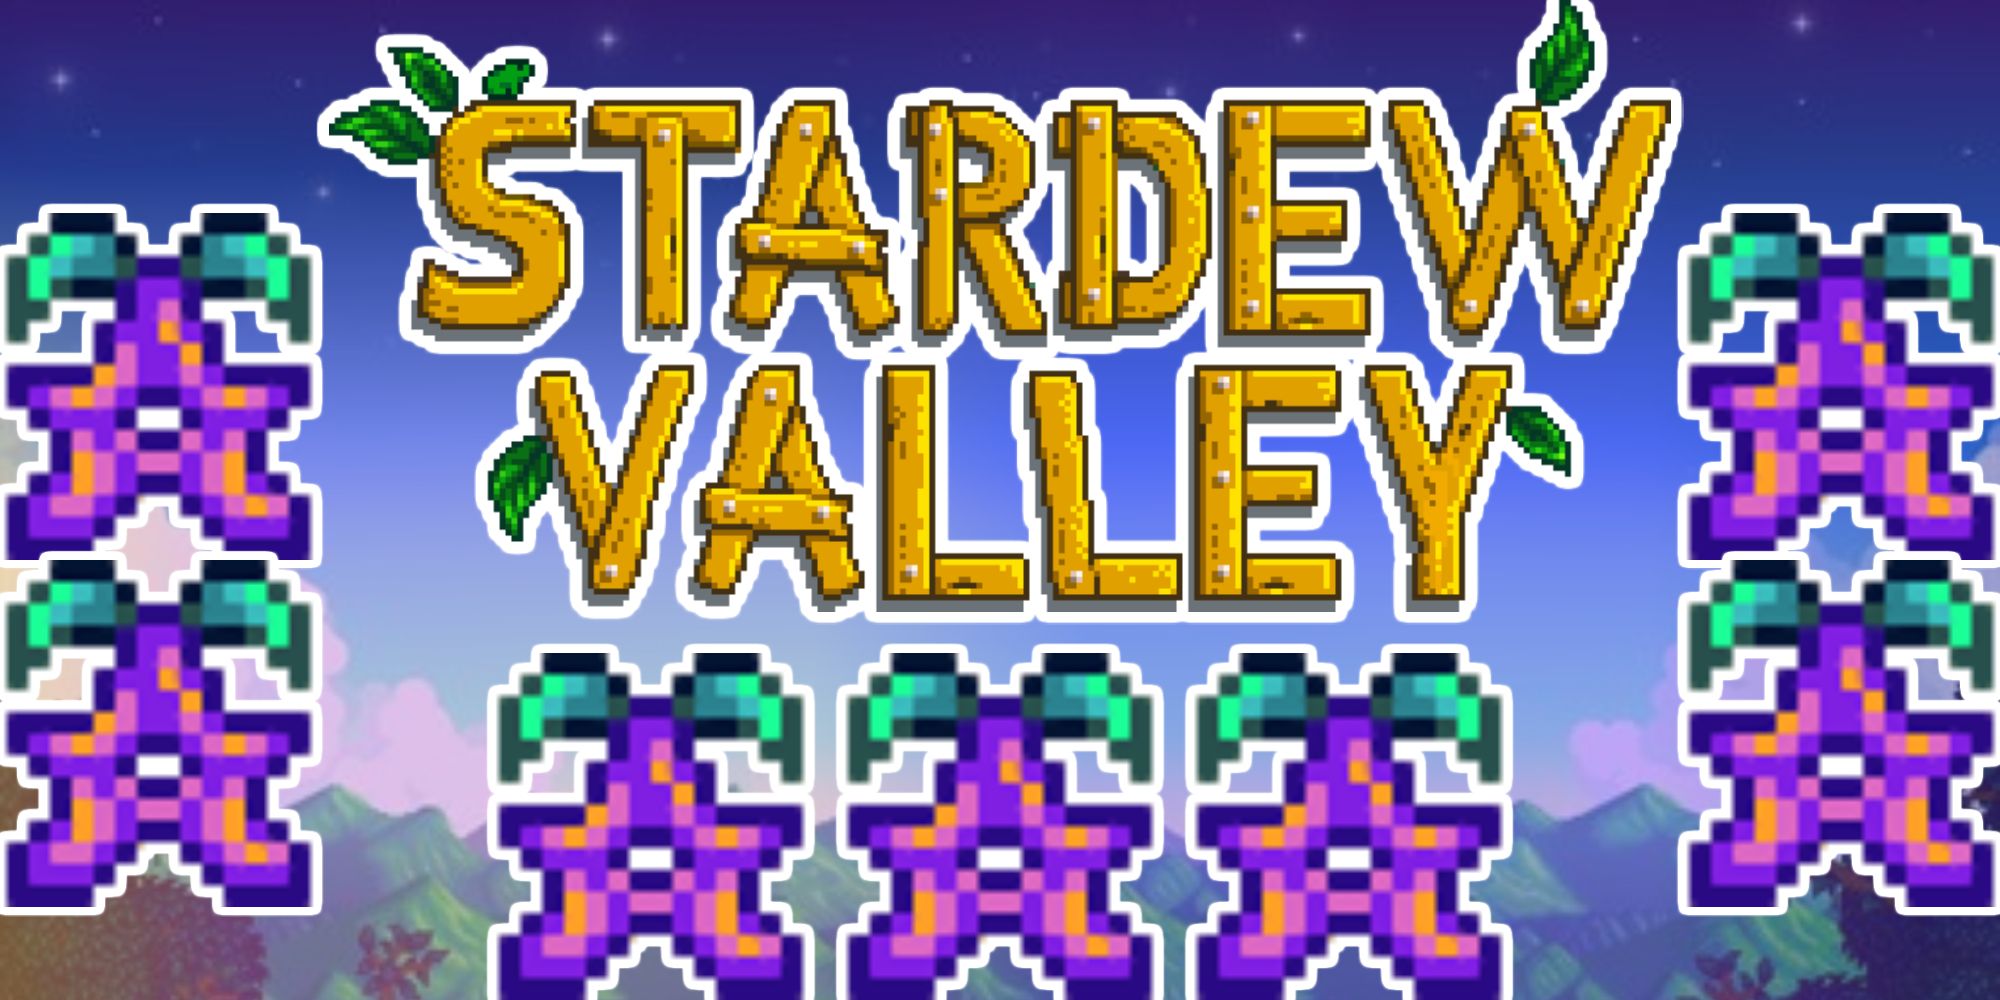 Stardew Valley Stardrops Lead Image